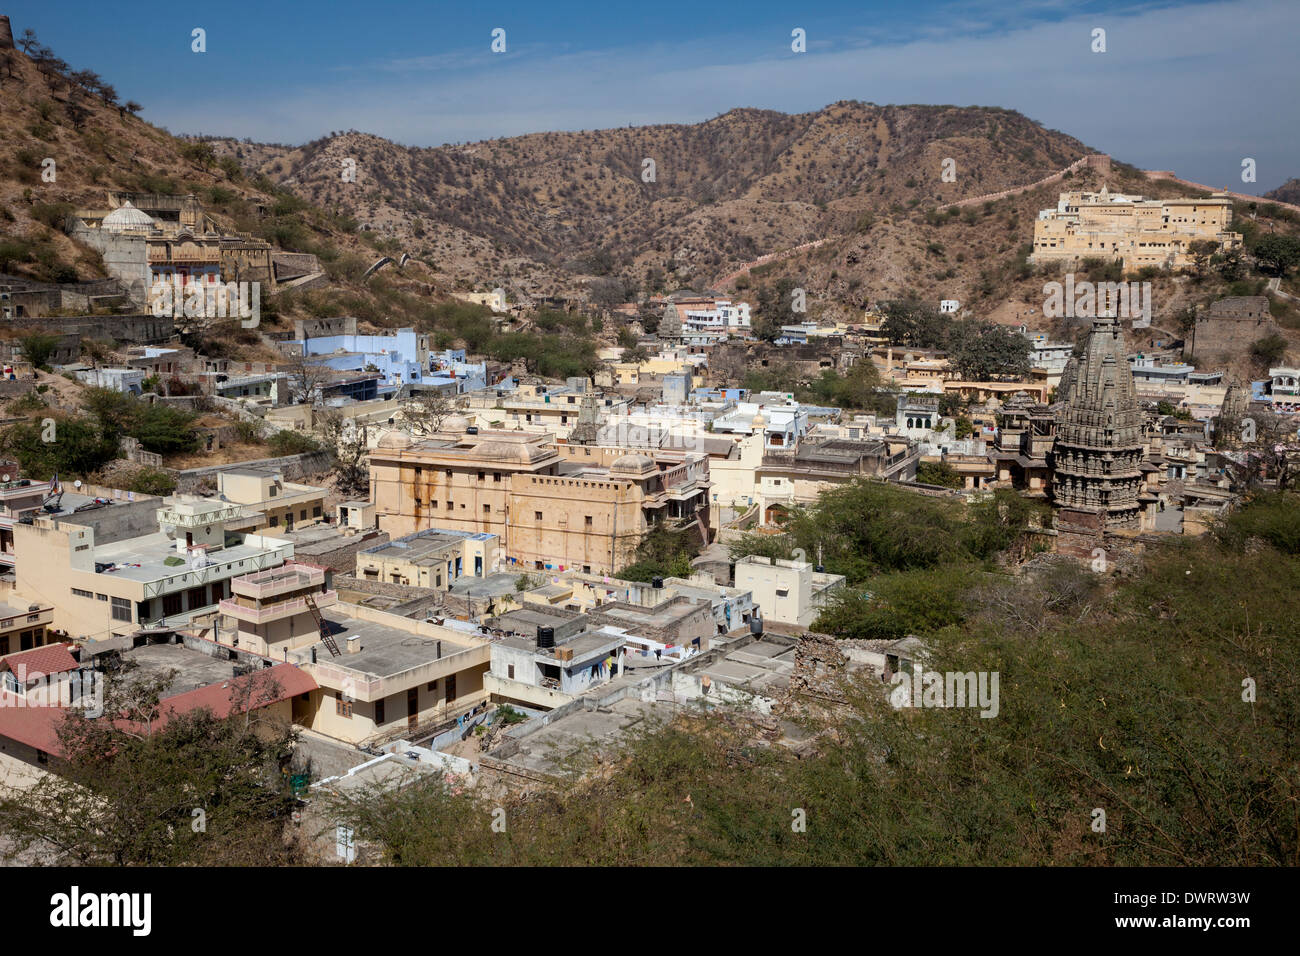 Amer (or Amber) Village, near Jaipur, Rajasthan, India. Stock Photo